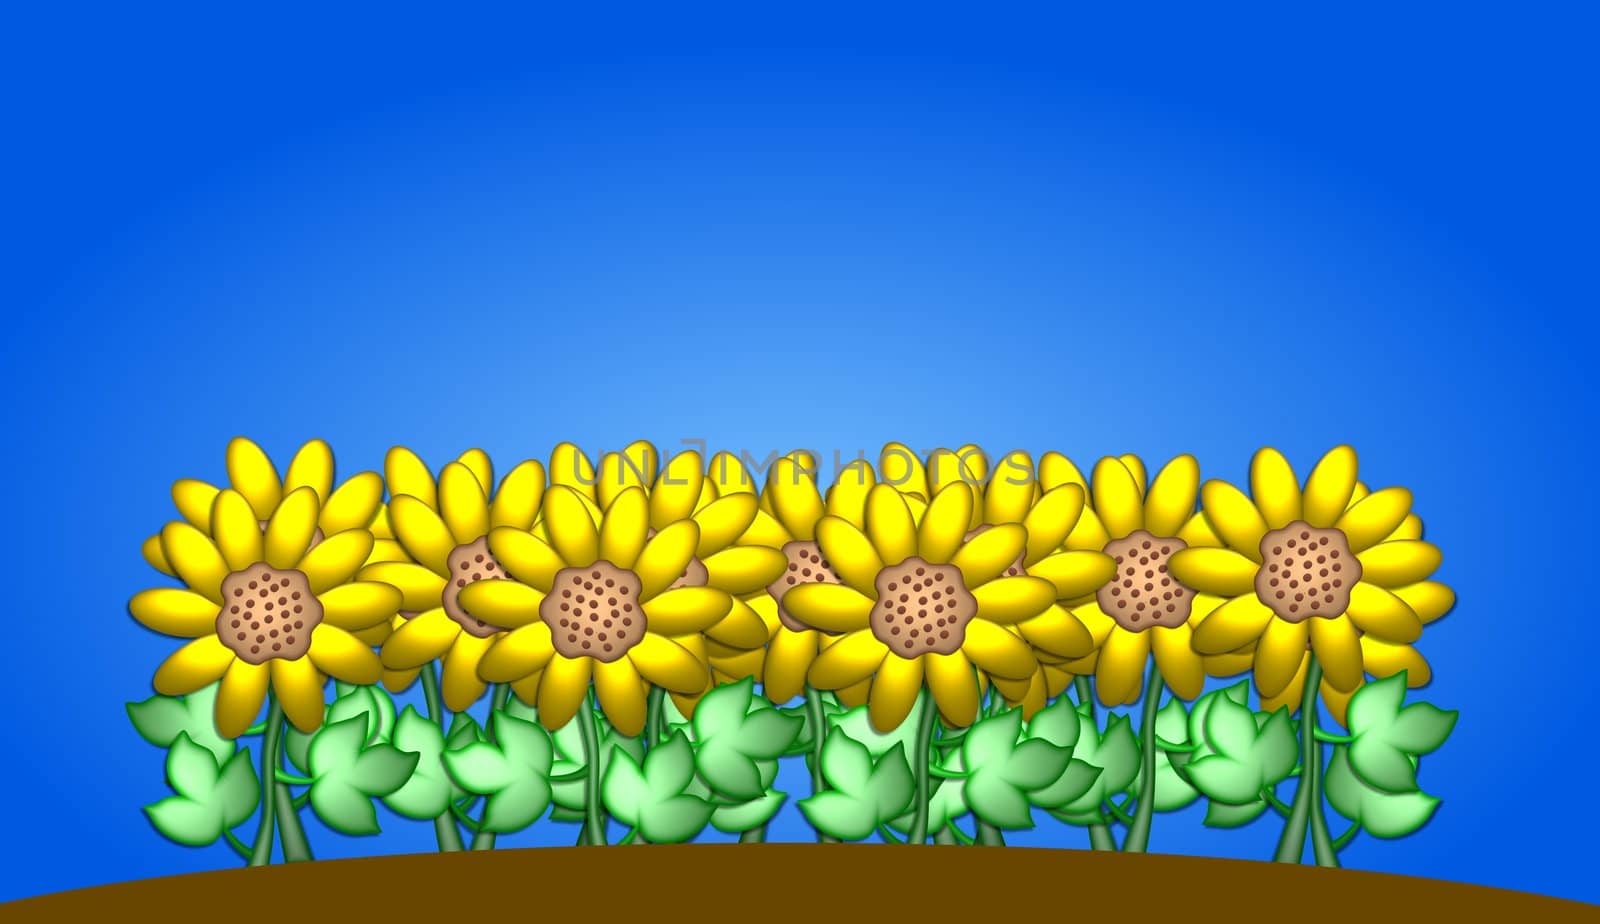 sunflowers by peromarketing